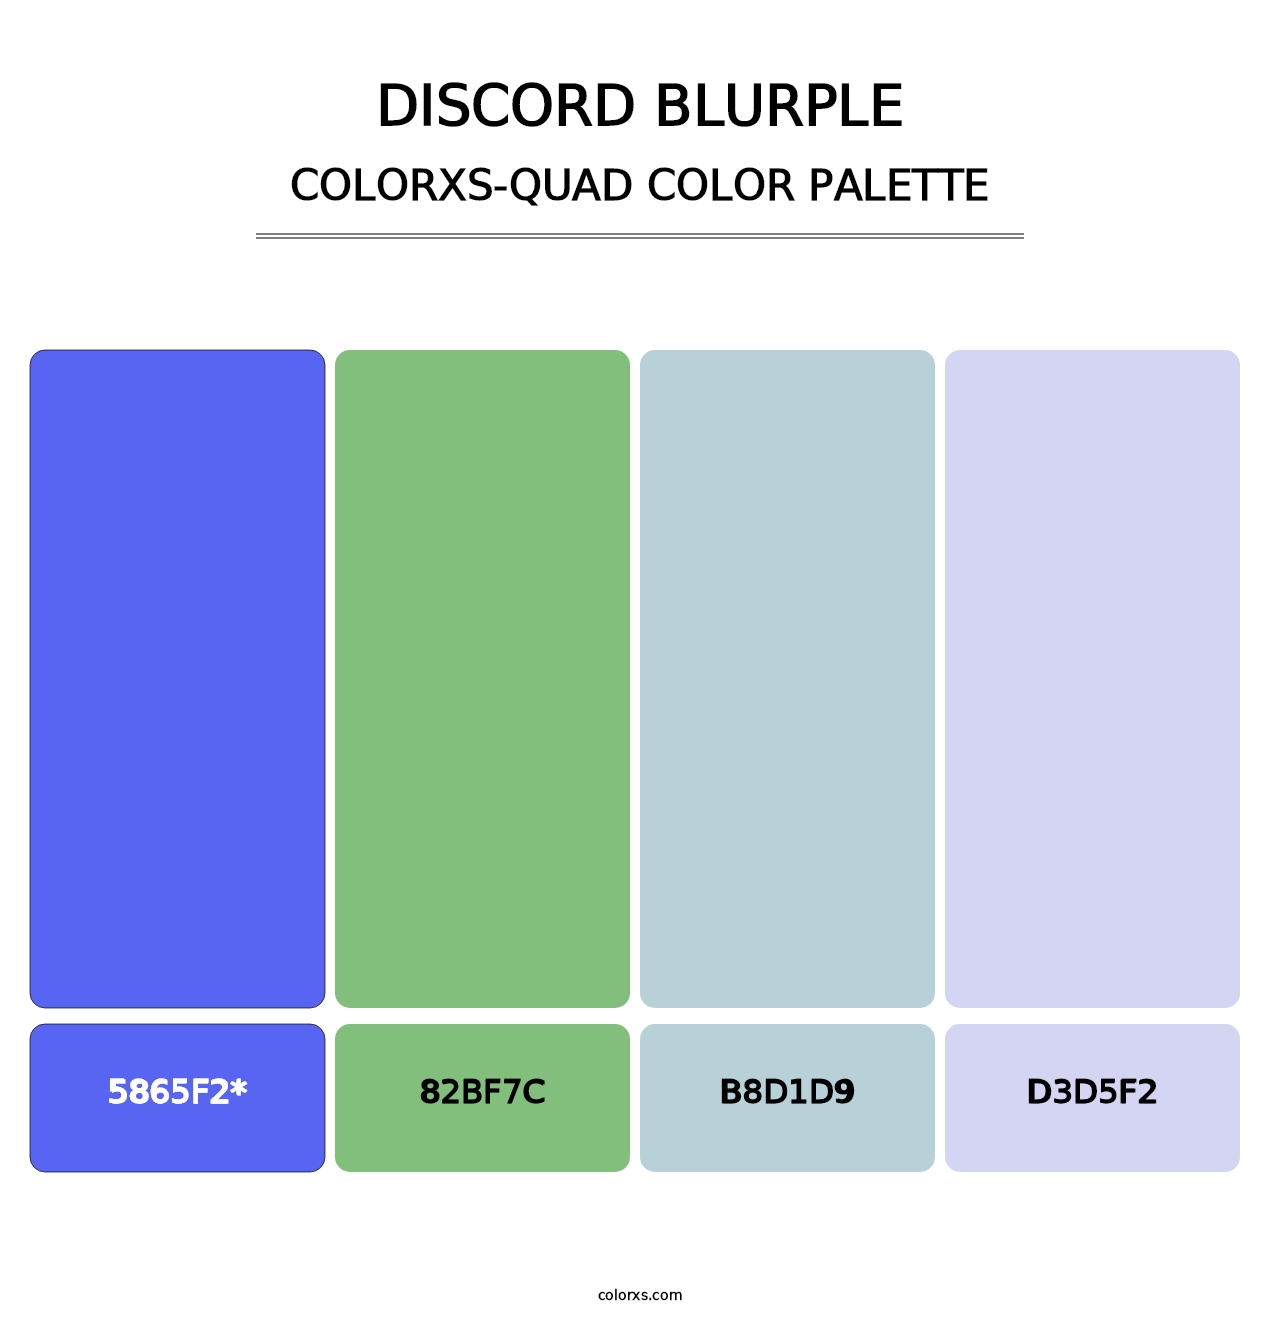 Discord Blurple - Colorxs Quad Palette